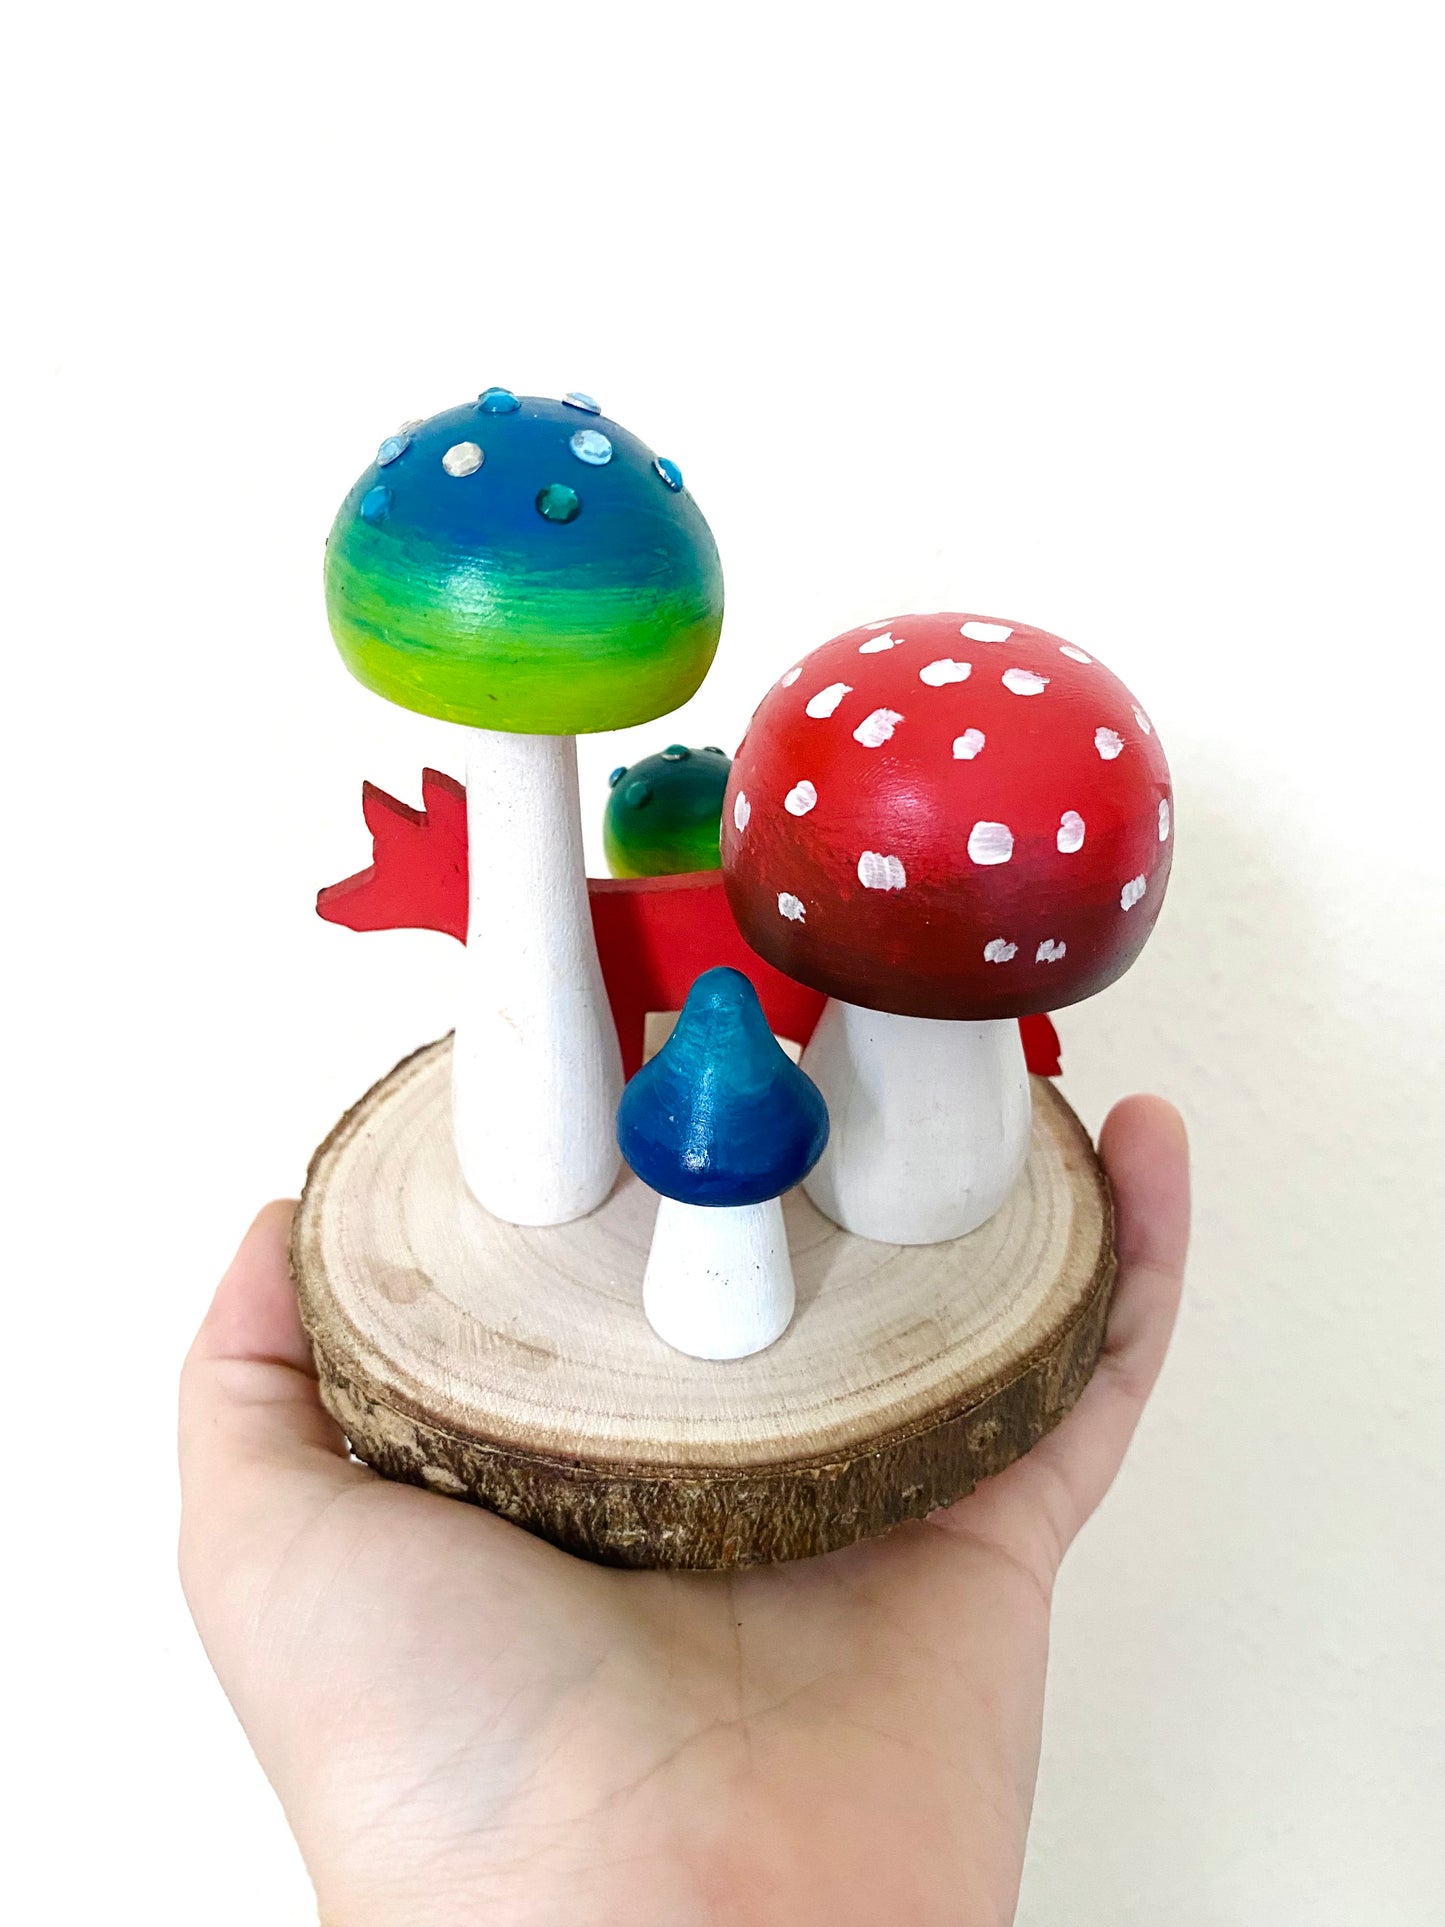 “Fox among fungi” wooden figurine / “Róka a gombák közt” fa figura